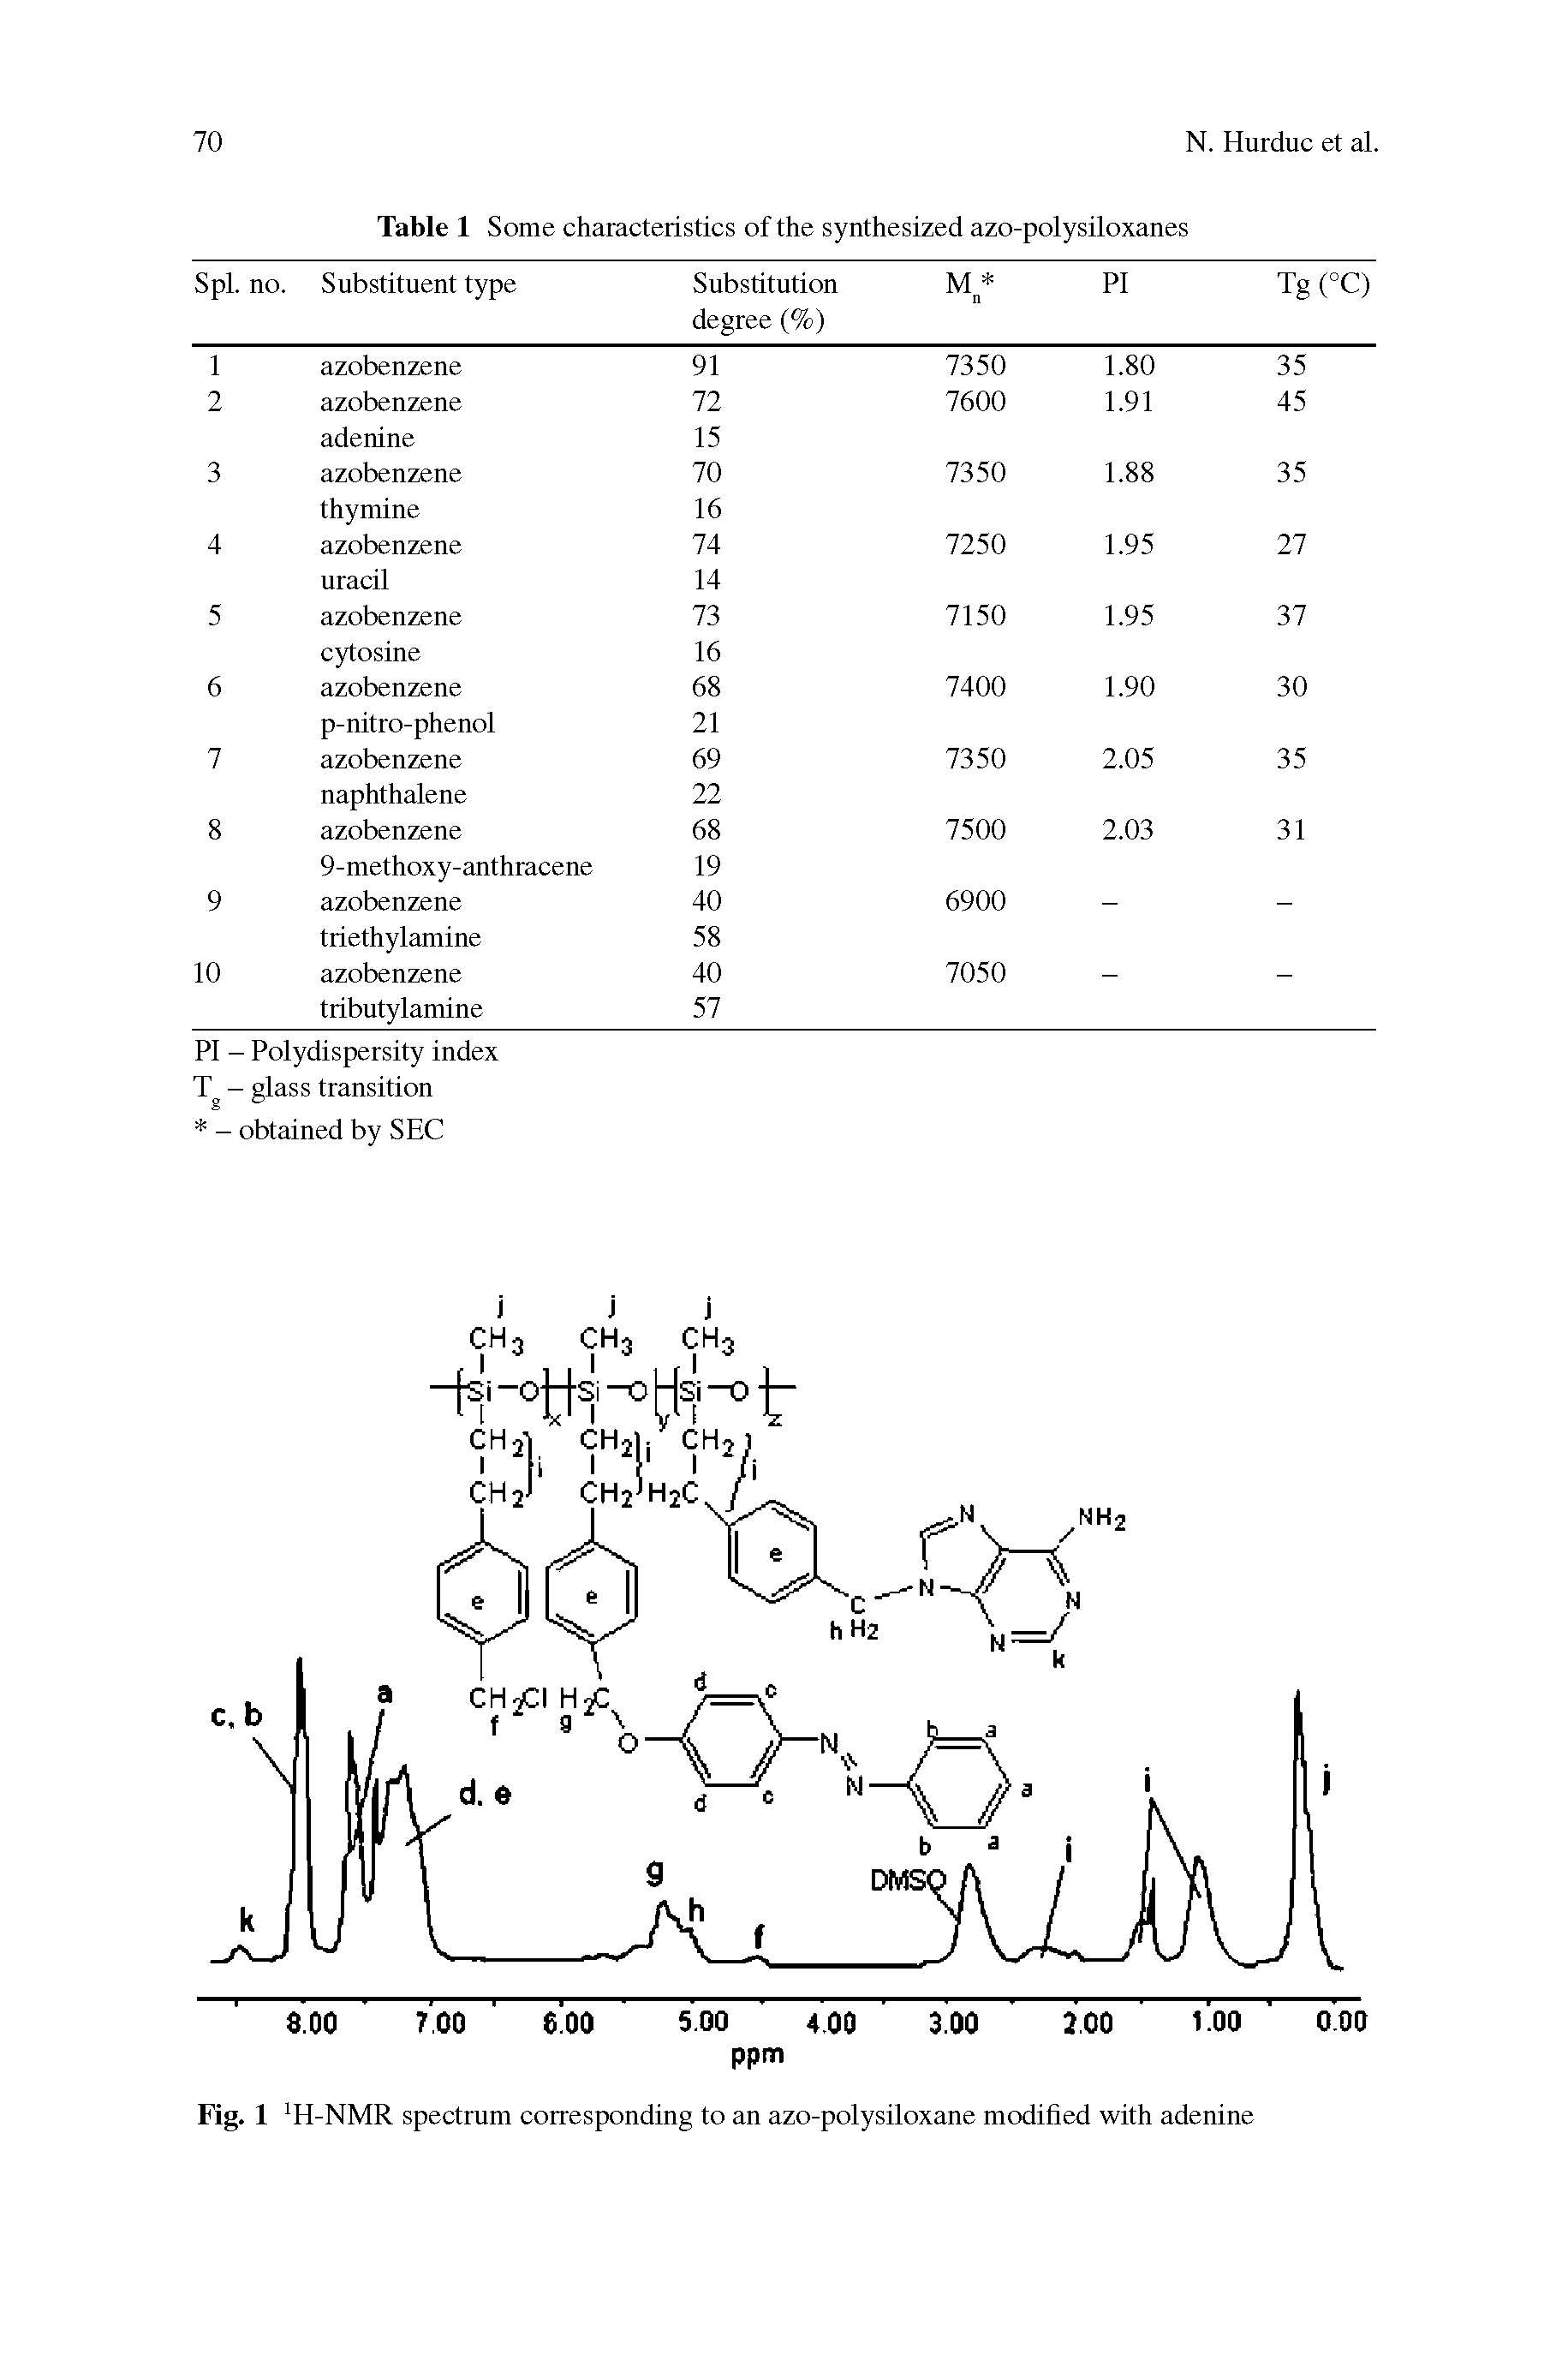 Fig. 1 H-NMR spectrum corresponding to an azo-polysiloxane modified with adenine...